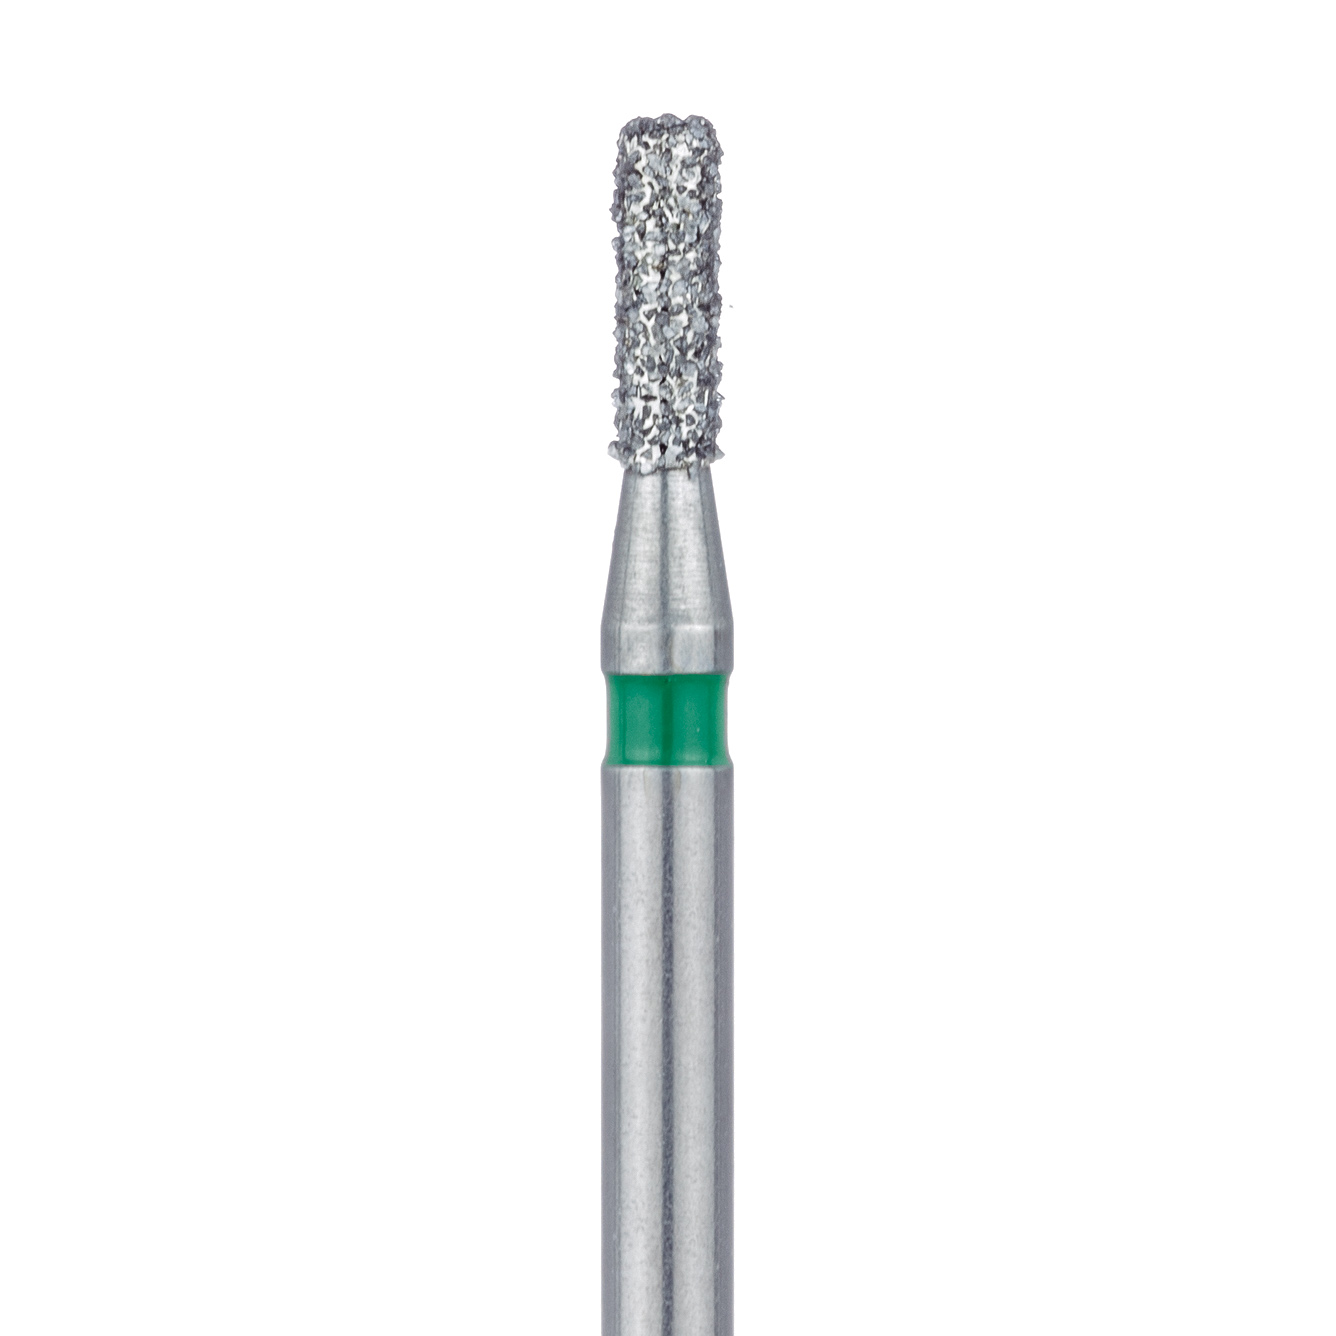 840G-014-FG Round Edge Cylinder Diamond Bur, 1.4mm Ø, Coarse, FG